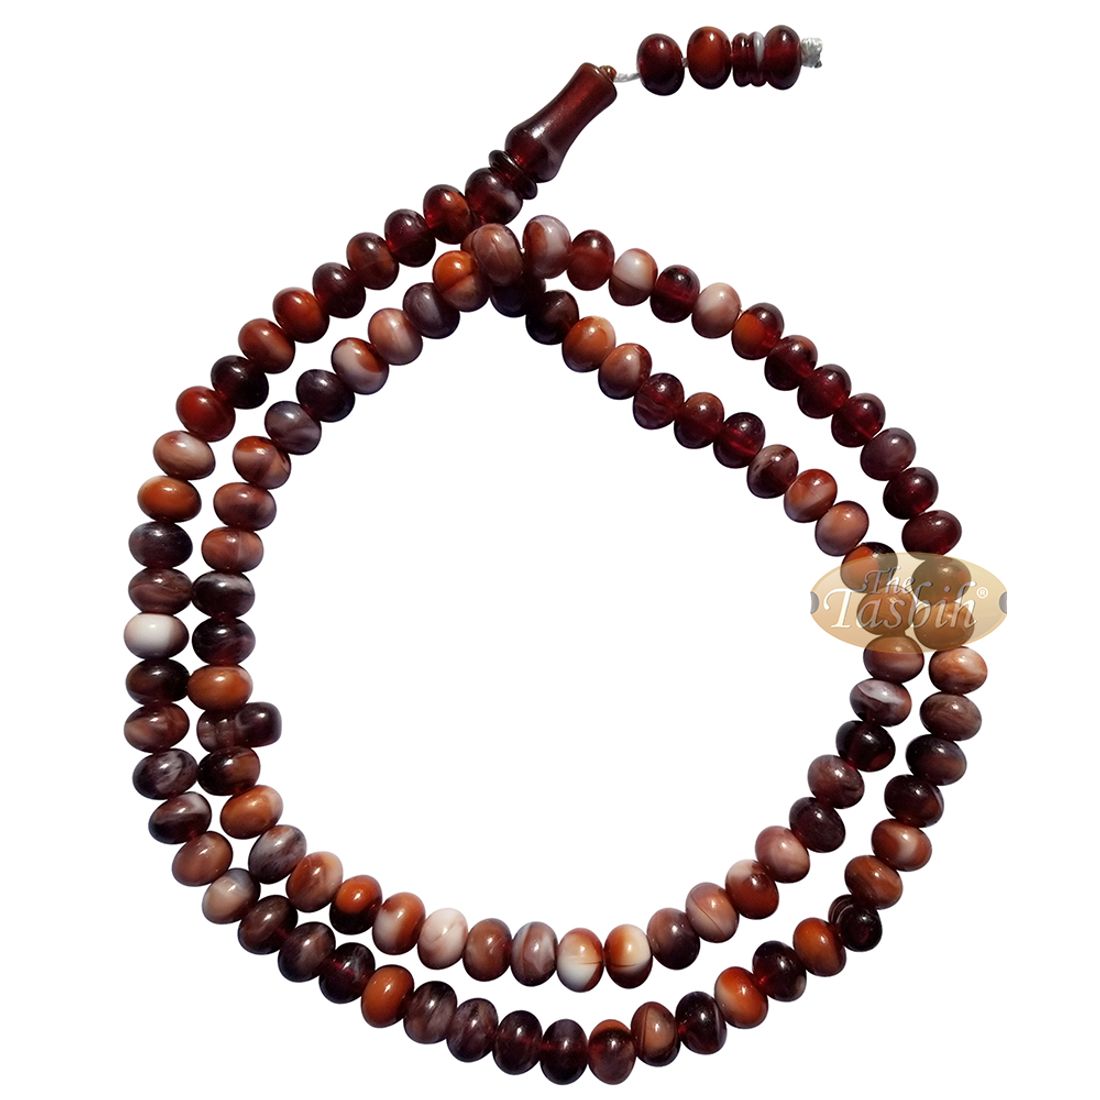 Muslim Prayer Beads – Marble Dark Brown 7x9mm Oval Plastic Beads 99ct Dhikr Tasbih Sibha